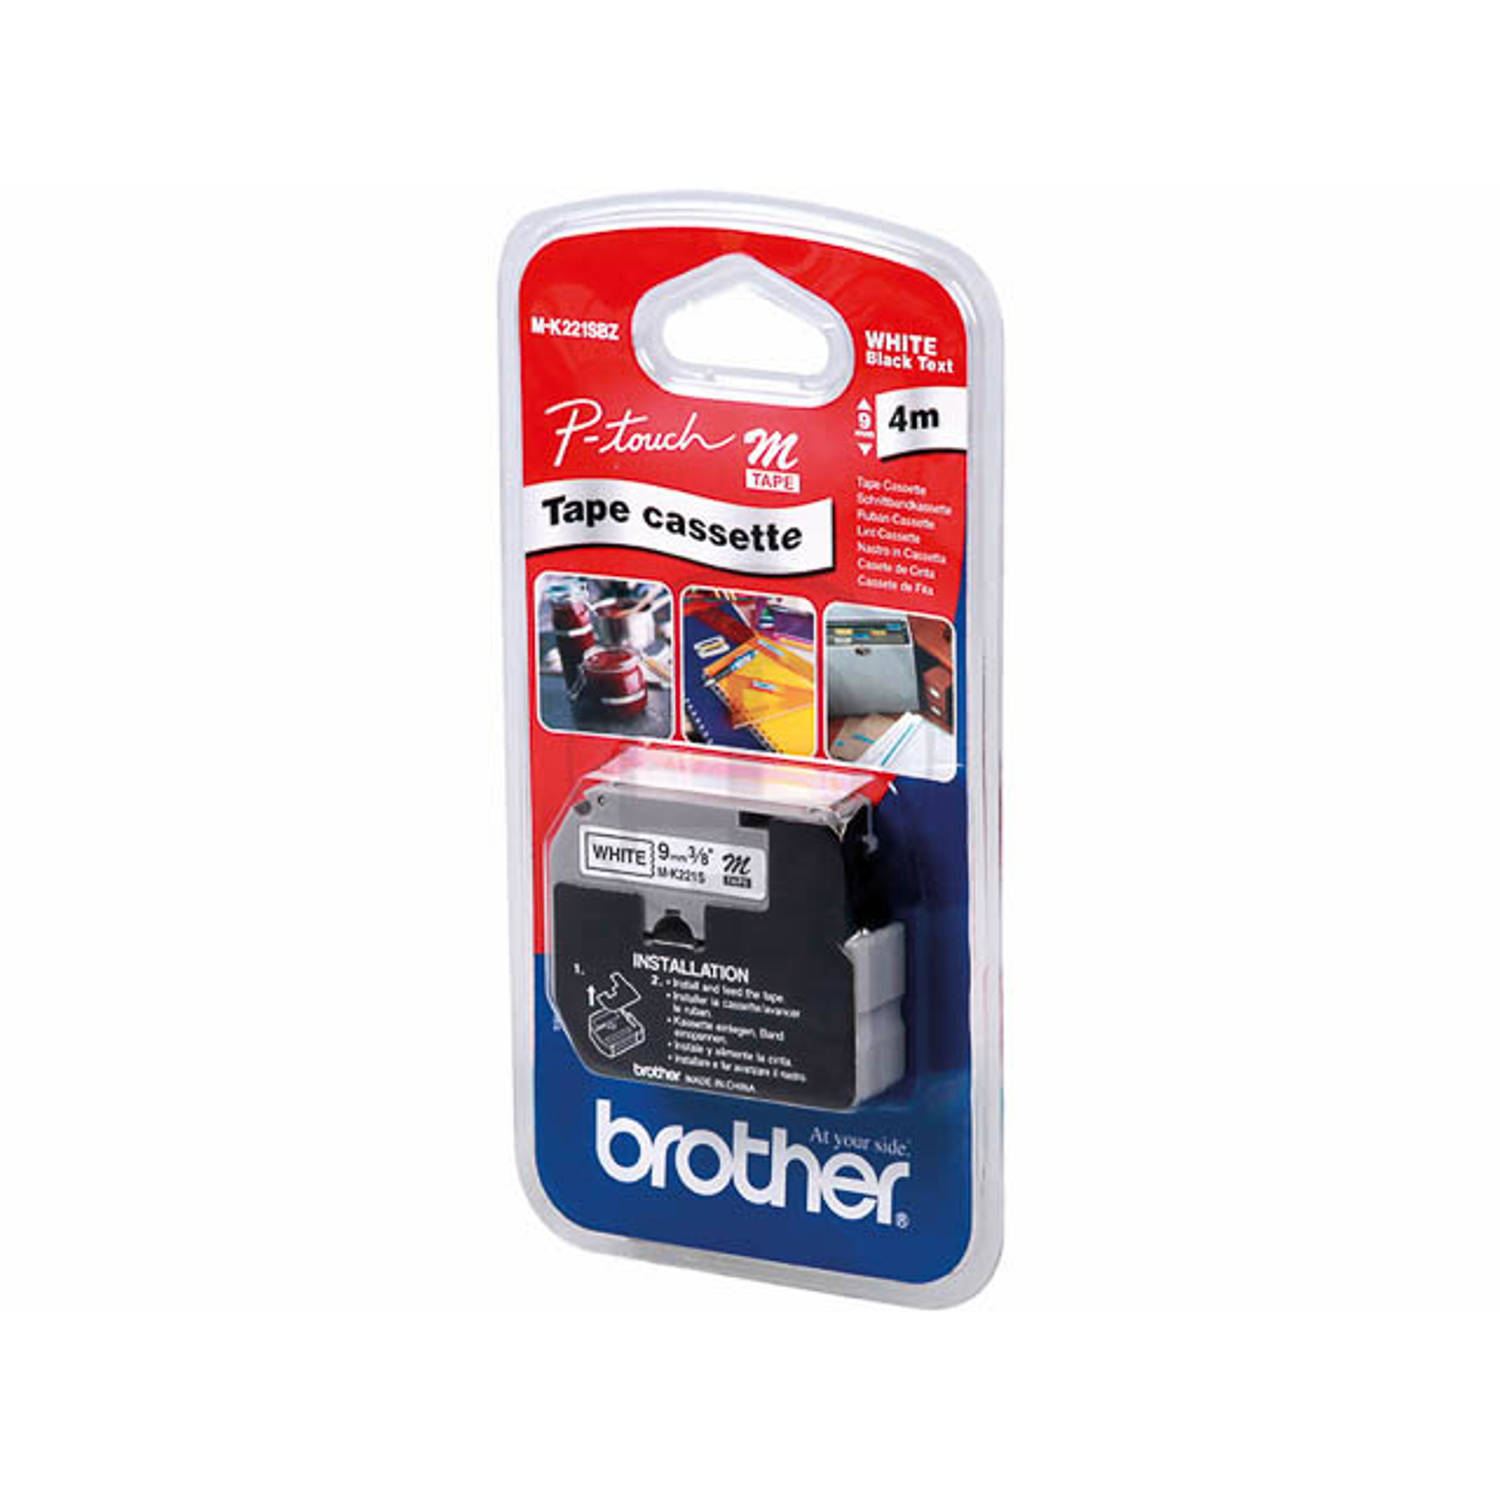 Brother MK221SBZ Labelling Tape (9mm) labelprinter-tape M